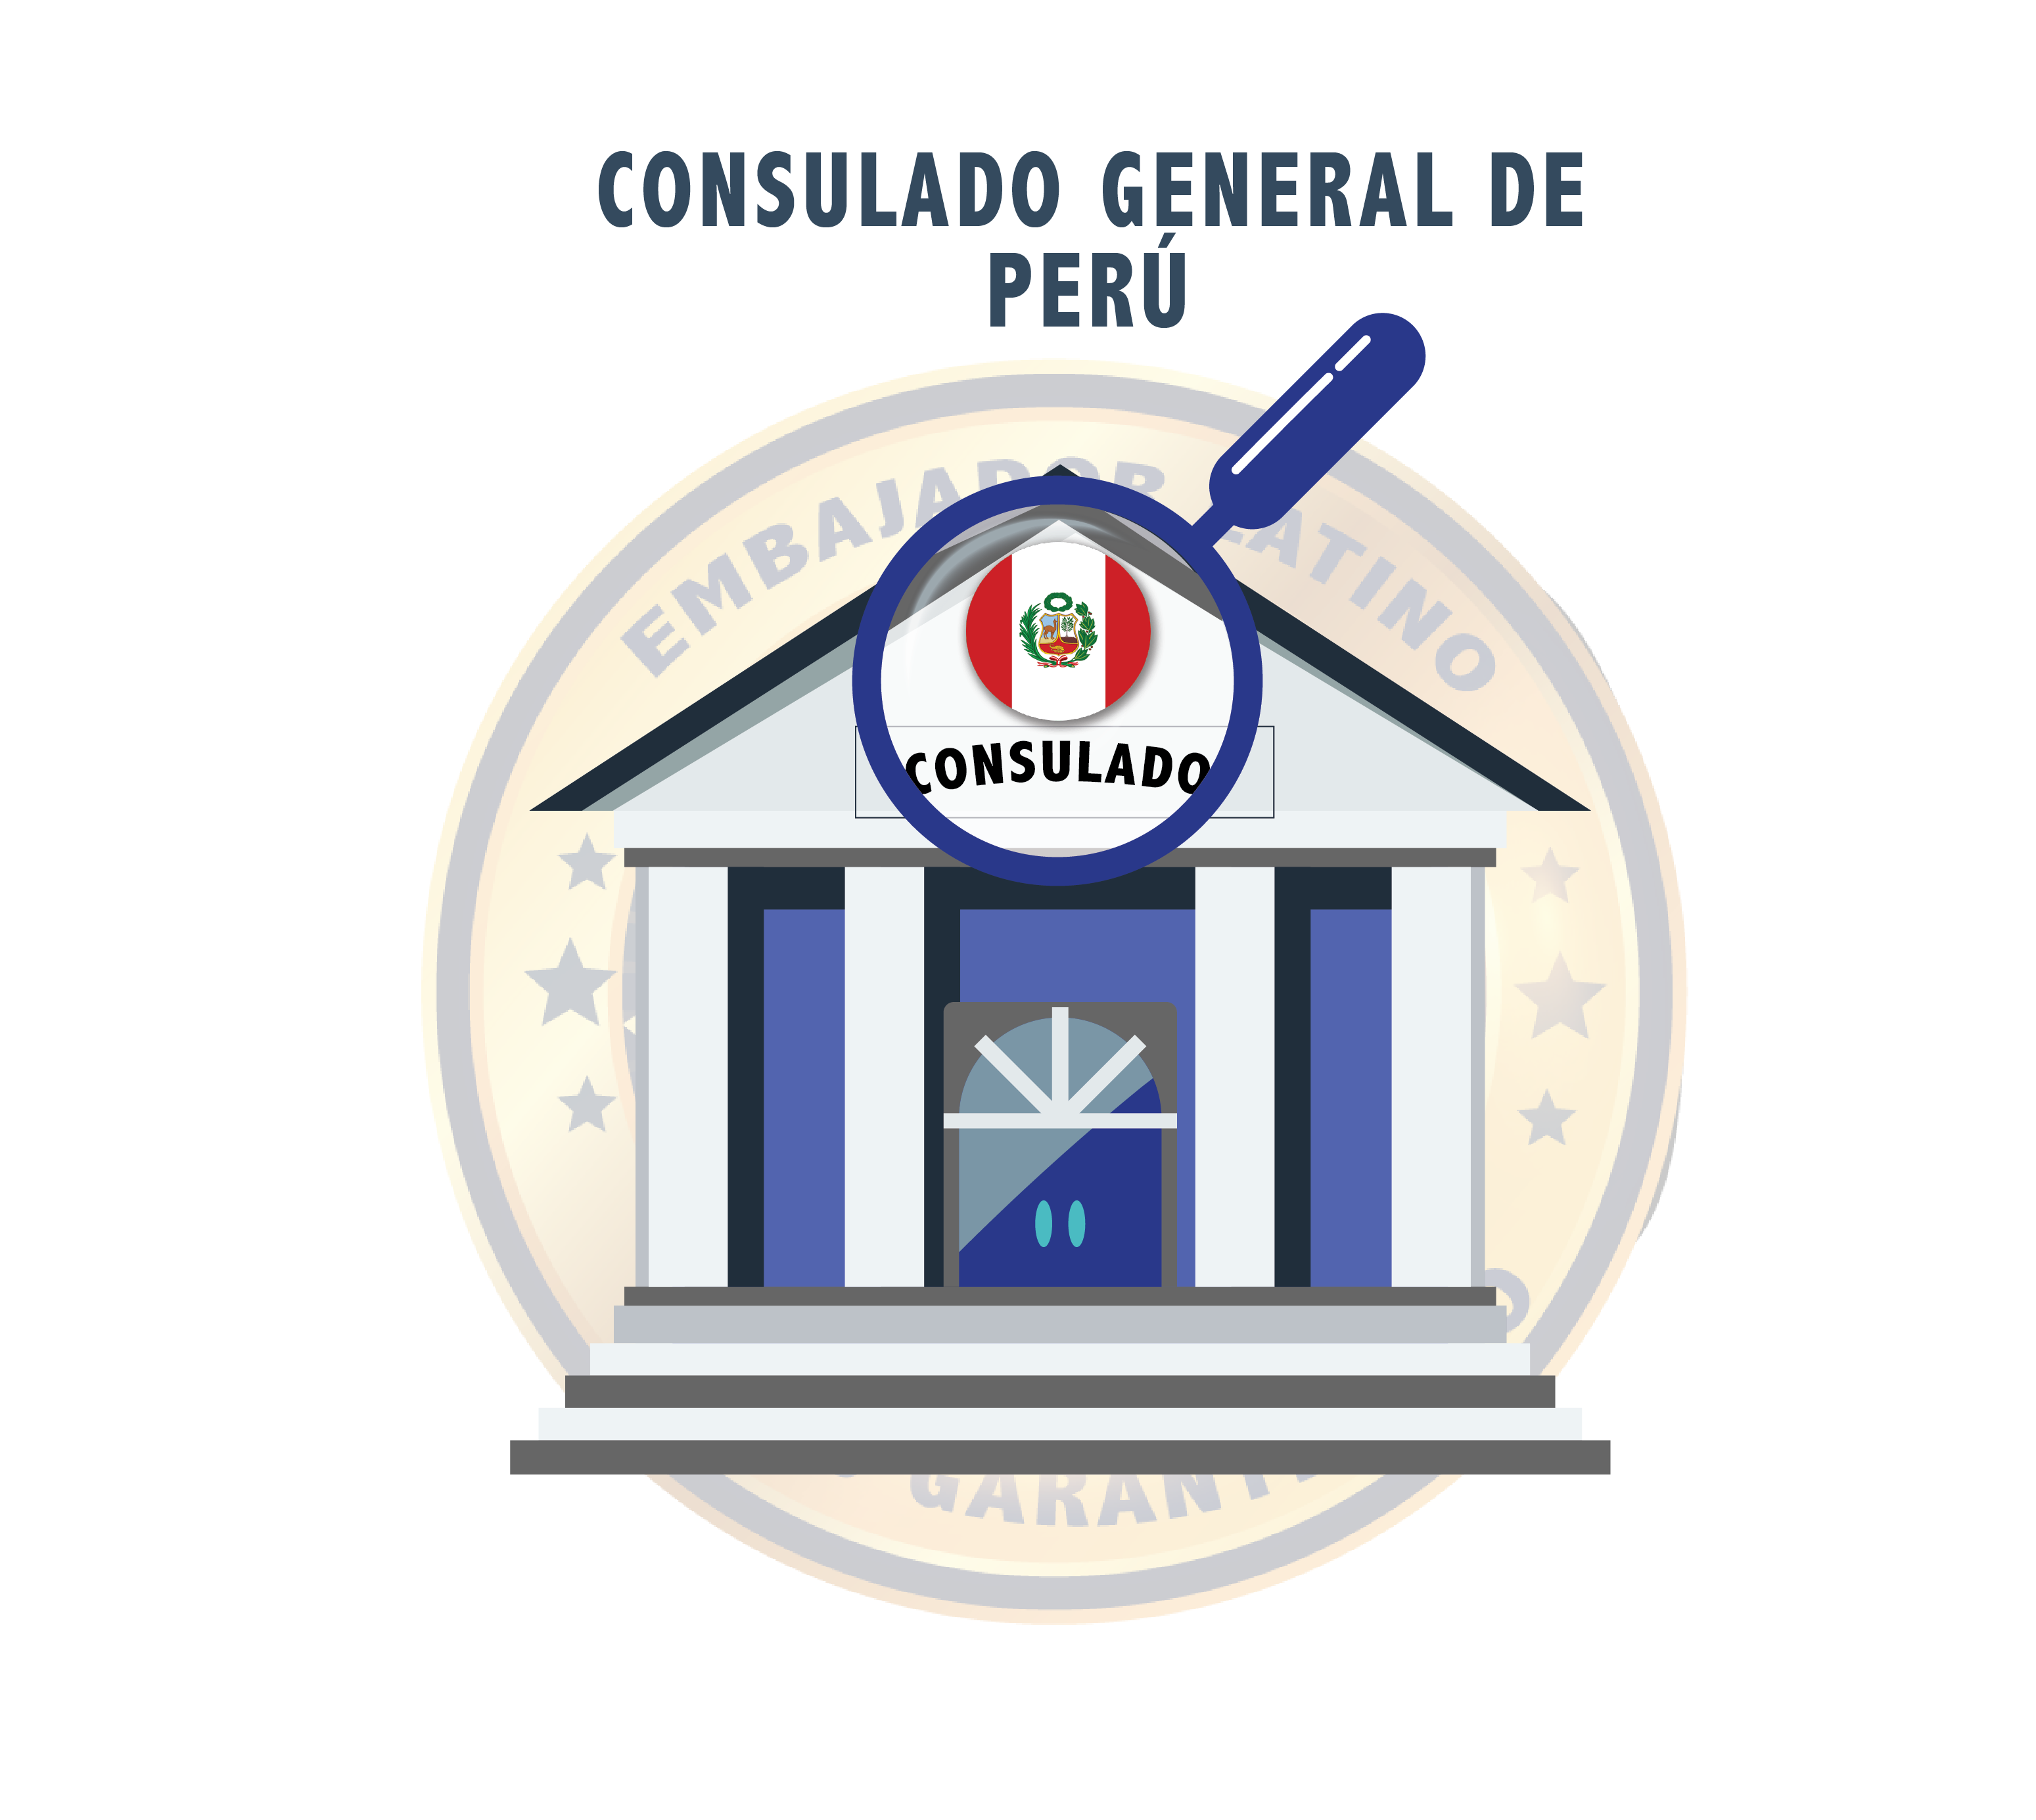 Consulado General de Peru